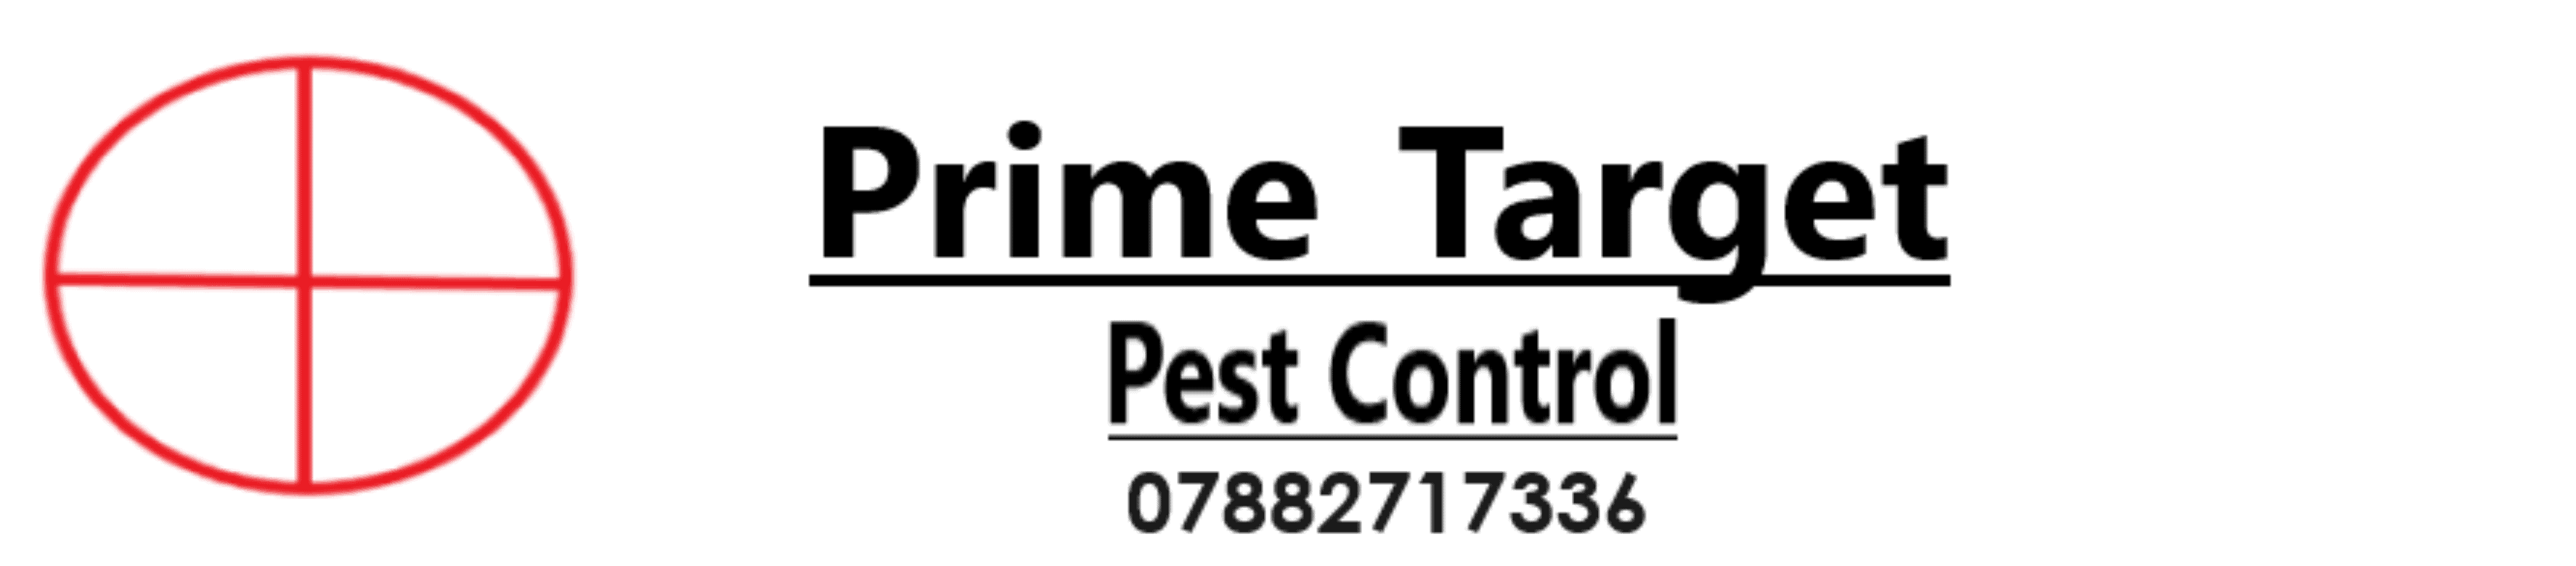 Prime Target Pest Control